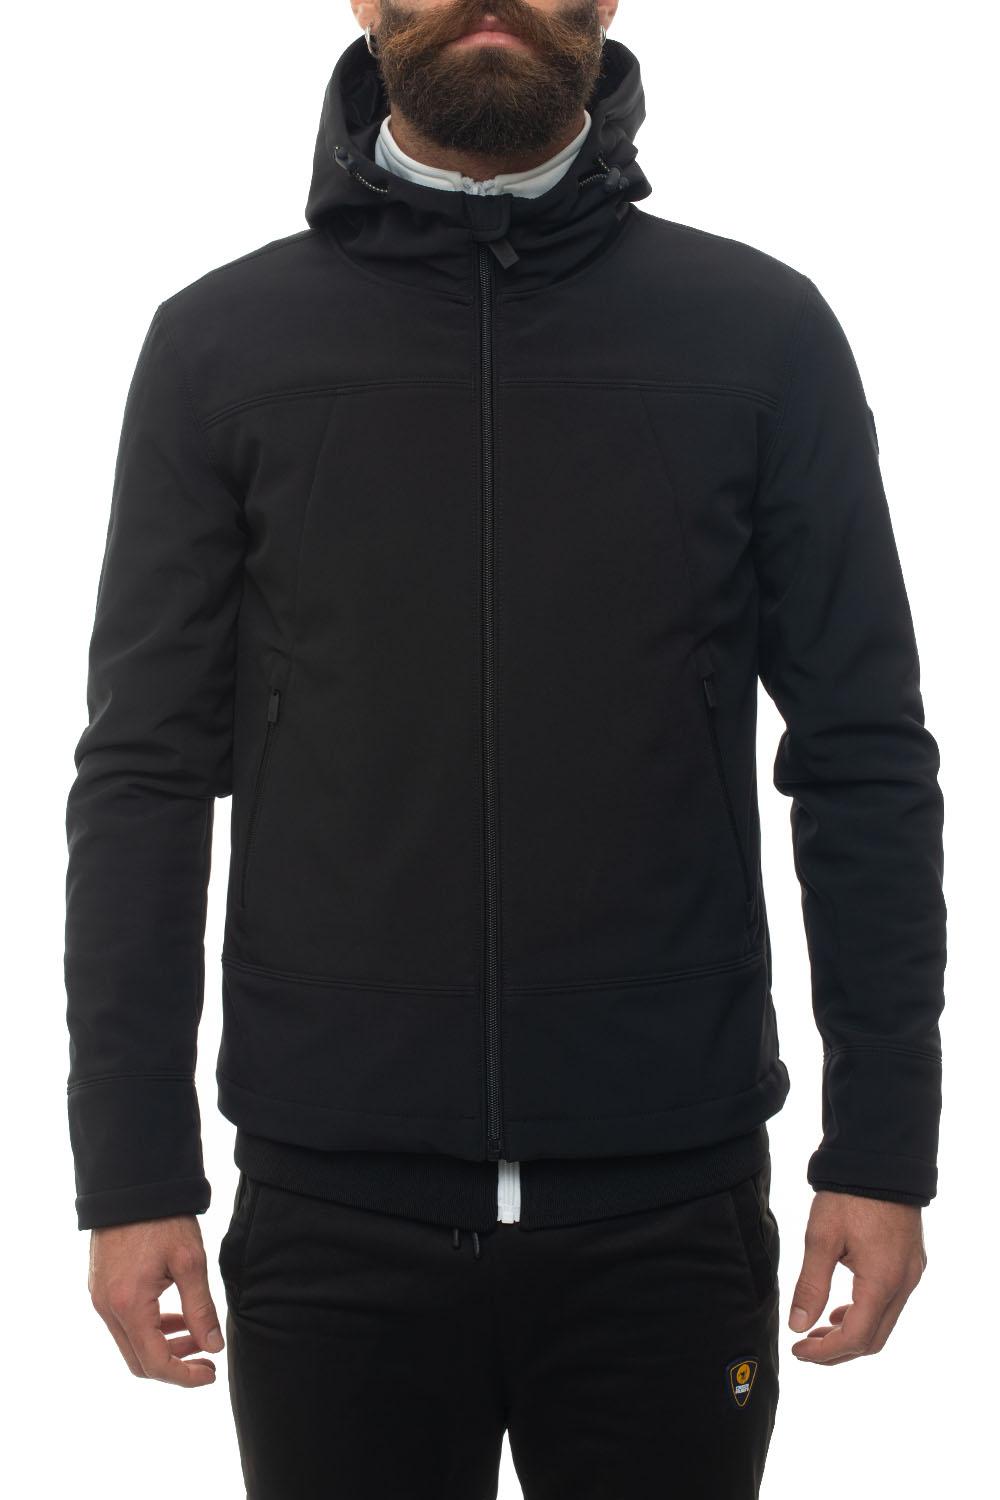 Ciesse Piumini Synthetic Colombo Hooded Harrington Jacket Black Polyester  for Men - Lyst